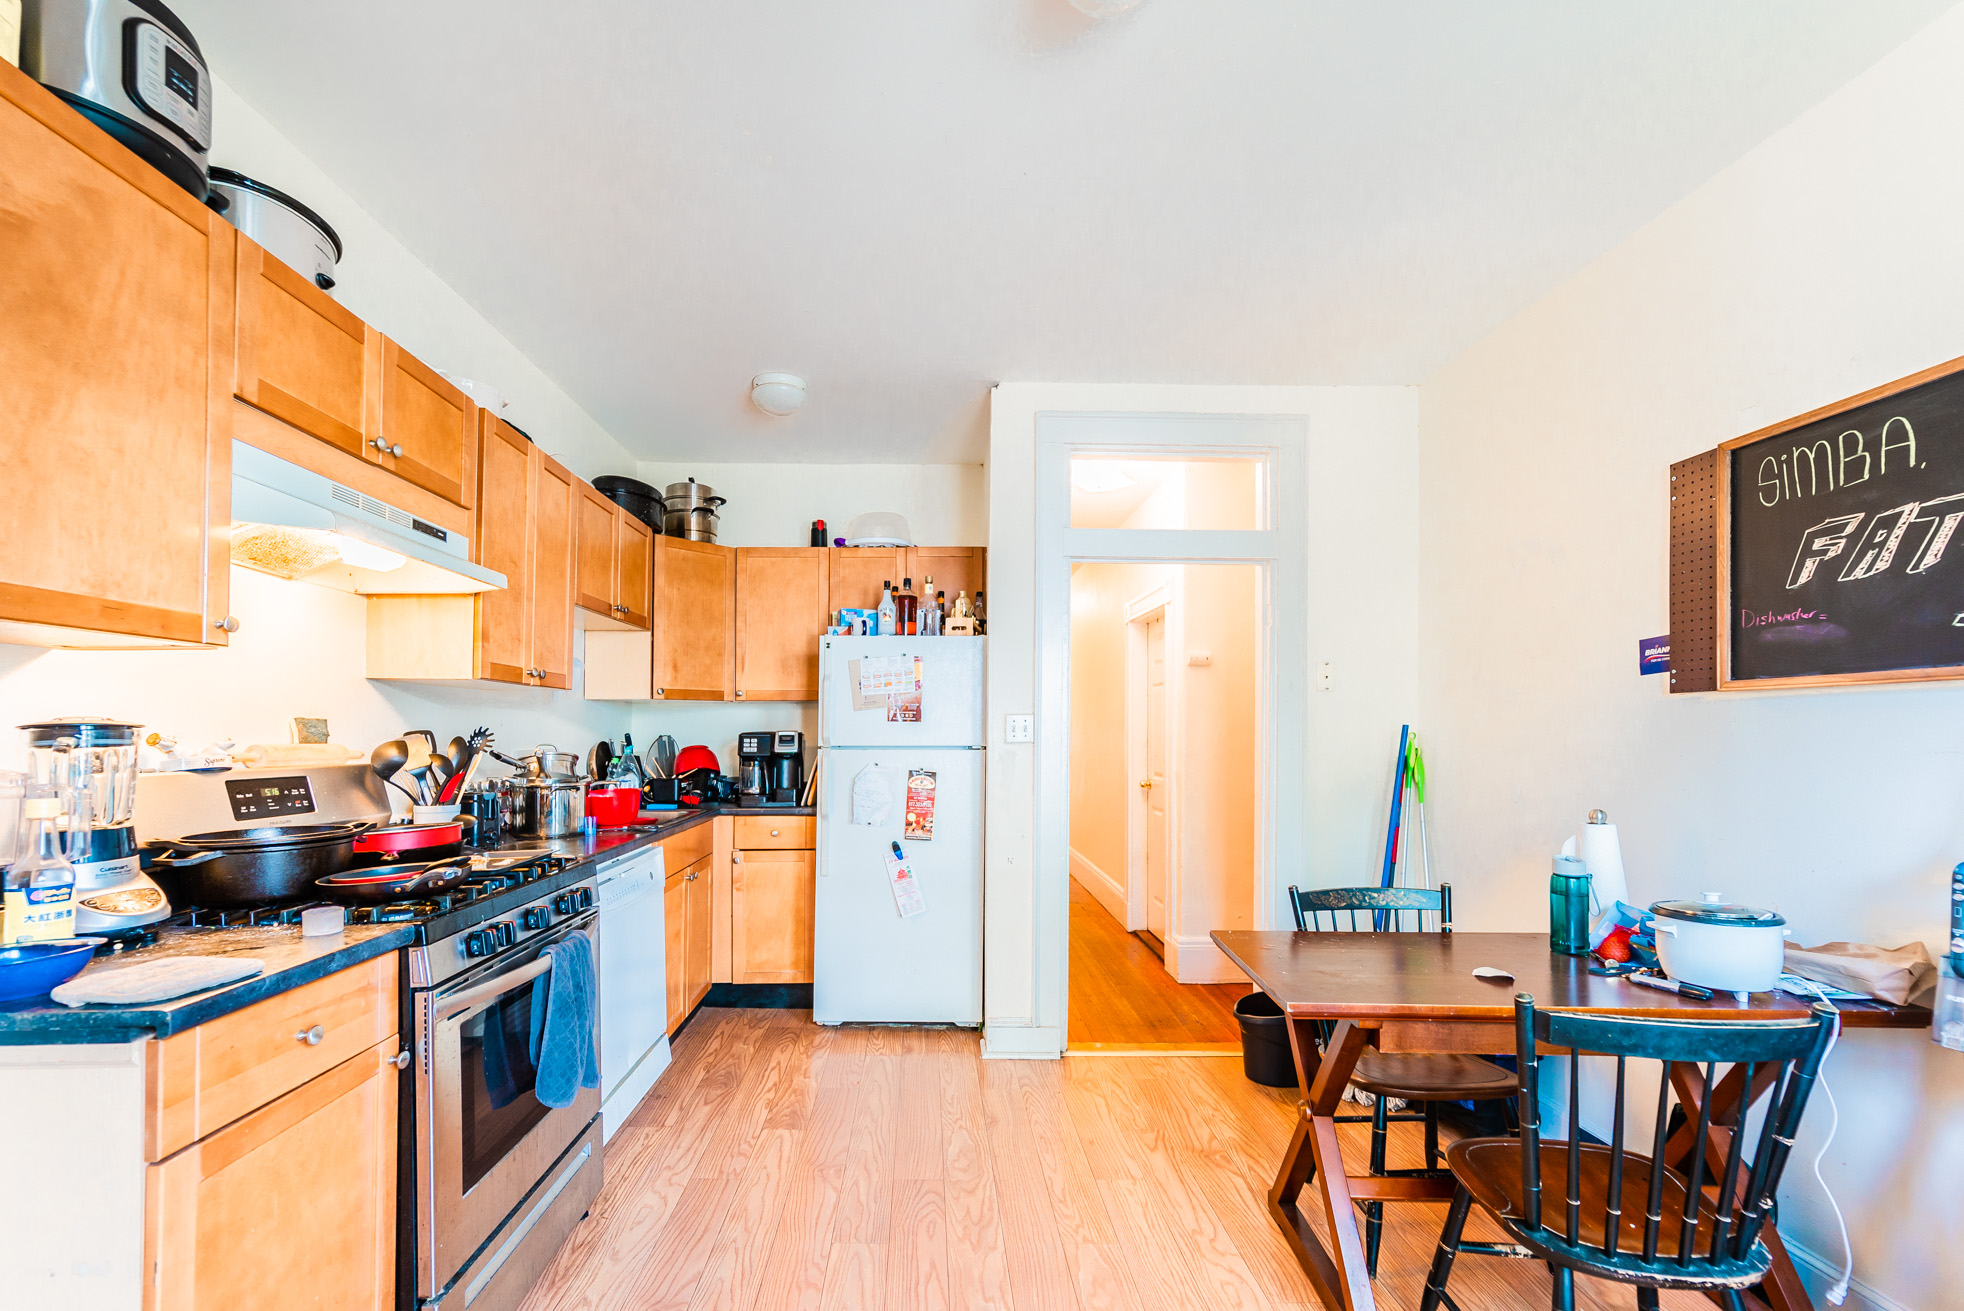 Photos of apartment on Green St.,Boston MA 02130